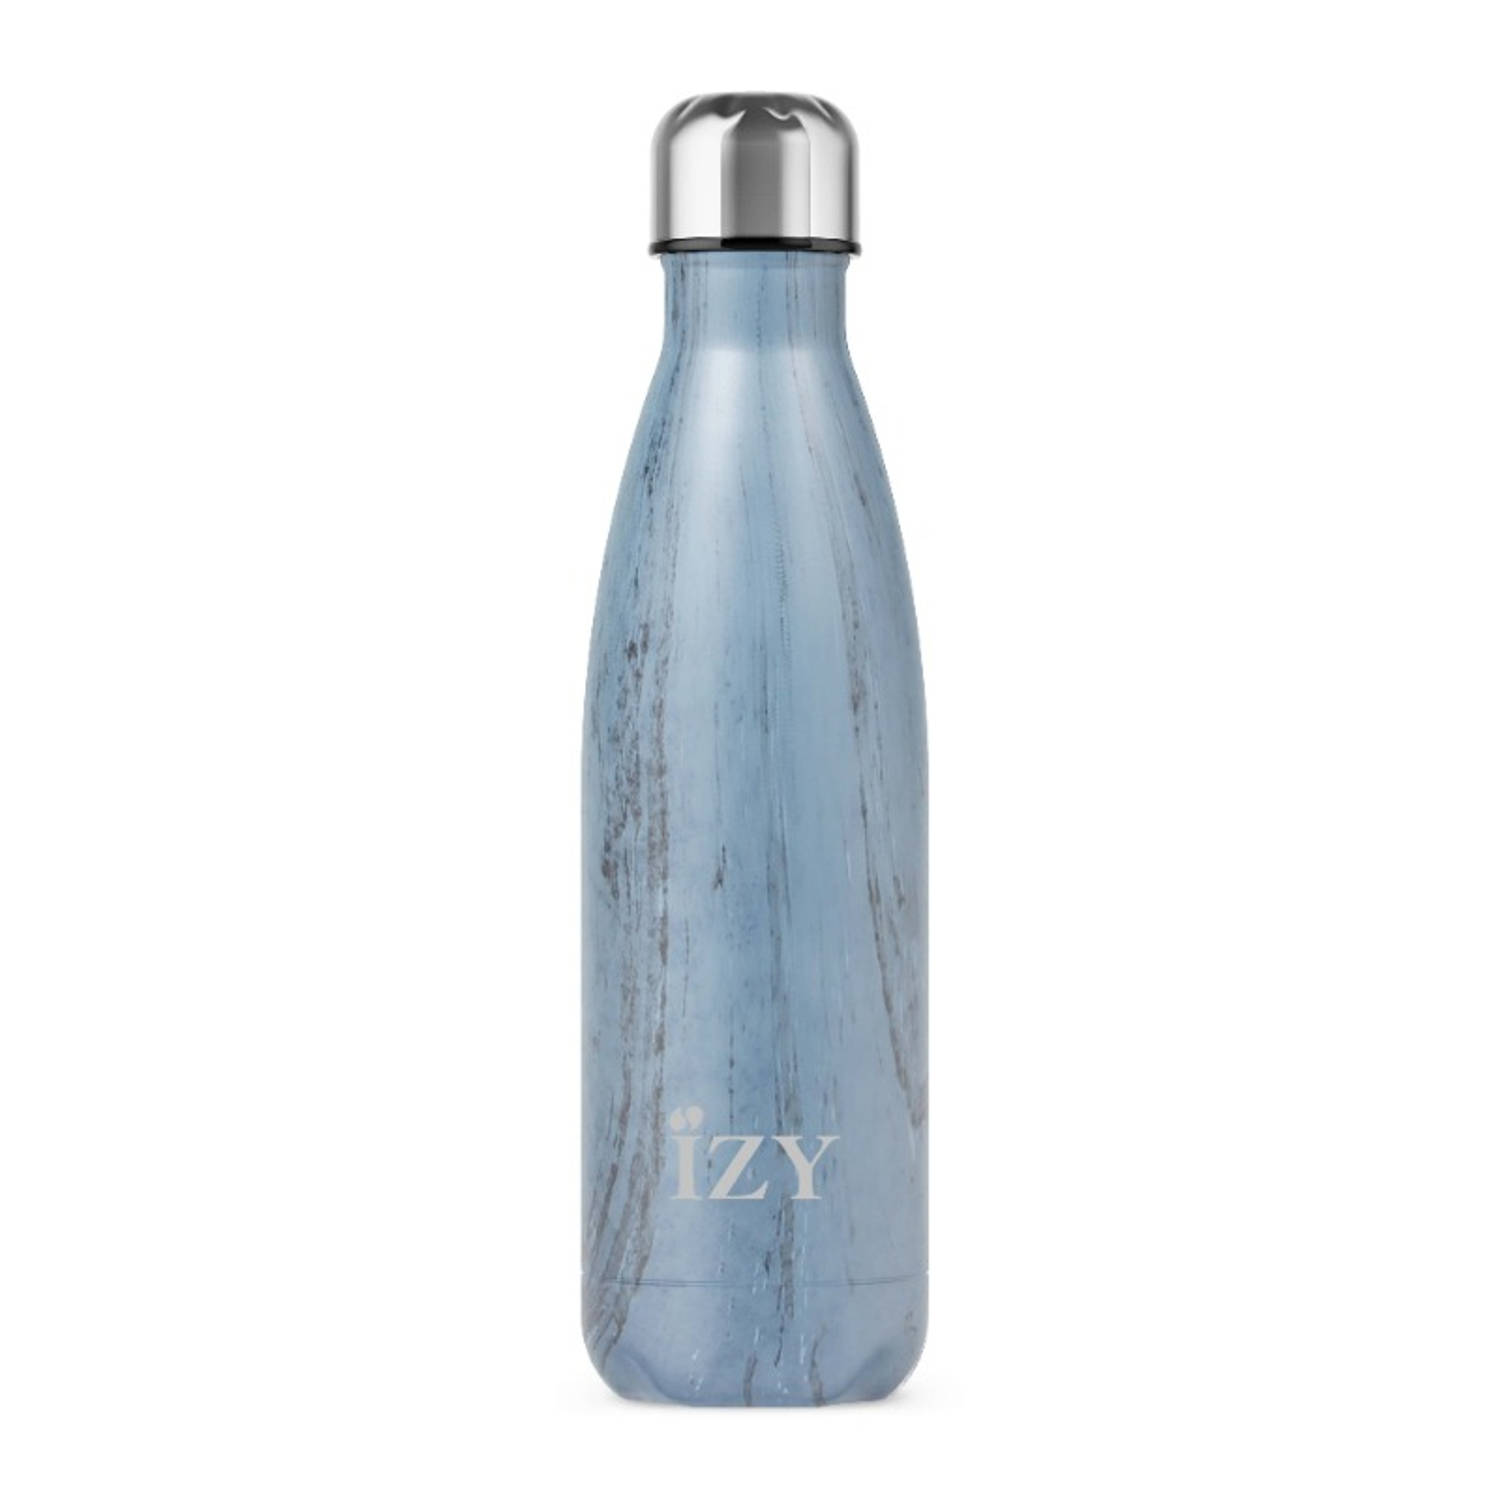 IZY fles Design Blue 500 ml.